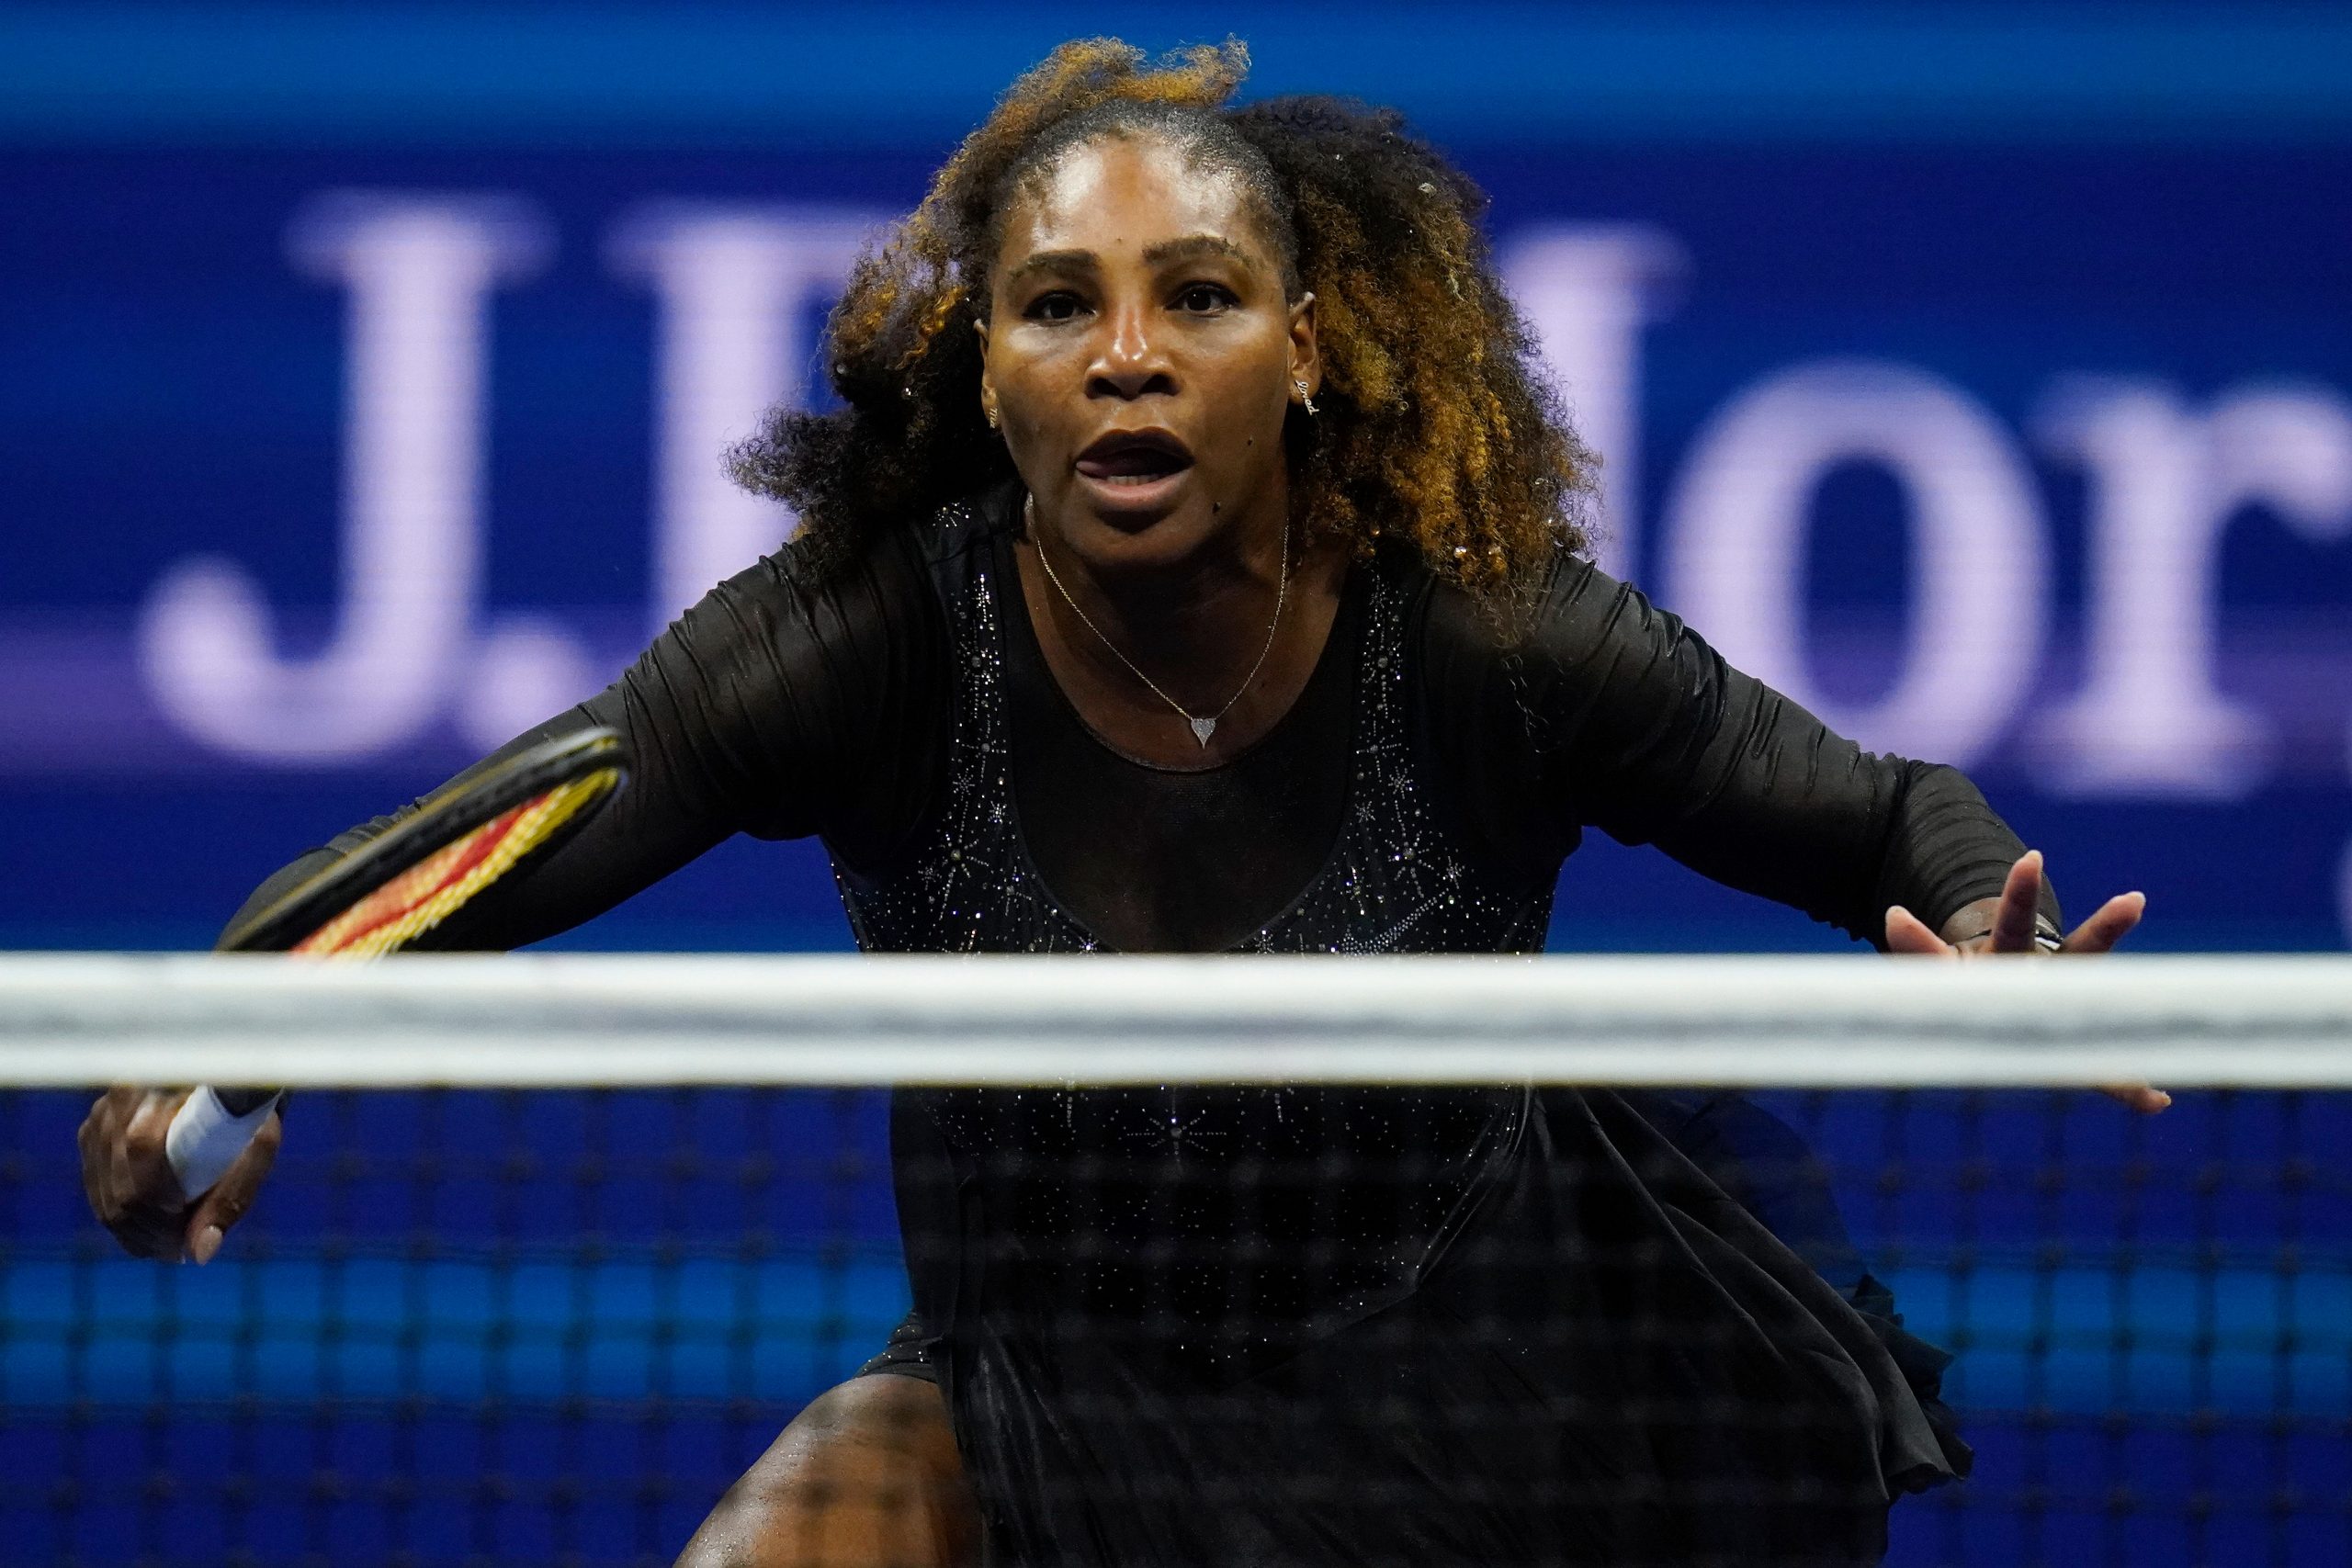 US Open: Serena Williams, Daniil Medvedev to play Wednesday night